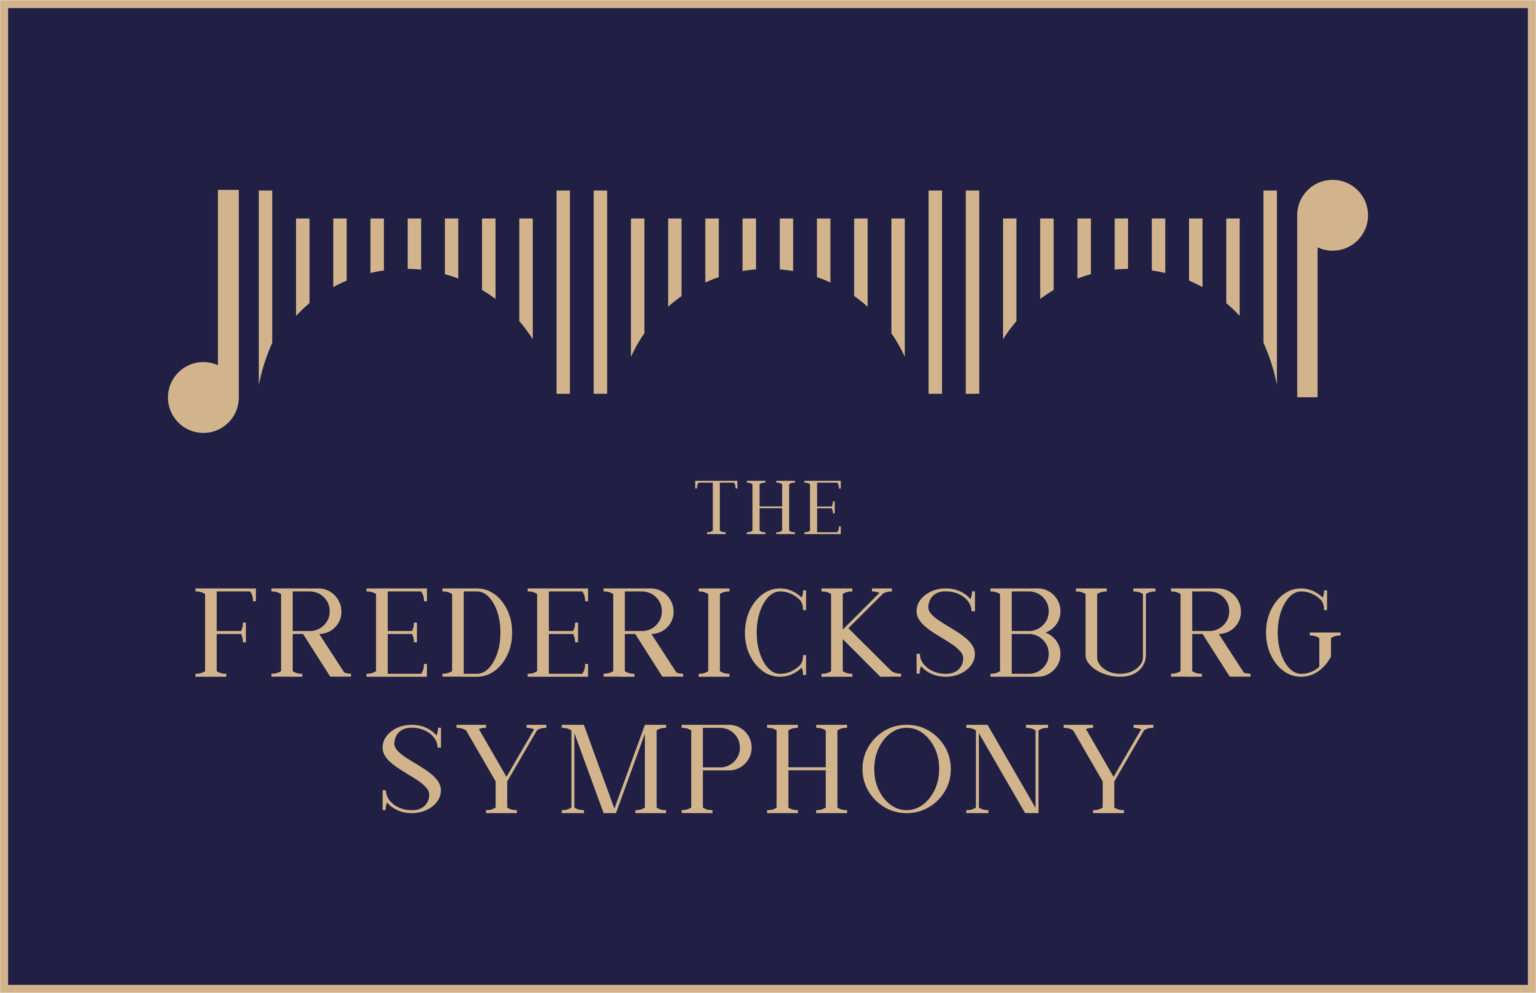 <h1 class="tribe-events-single-event-title">Fredericksburg Symphony Valentine’s Concert “Romantic Fantasies”</h1>